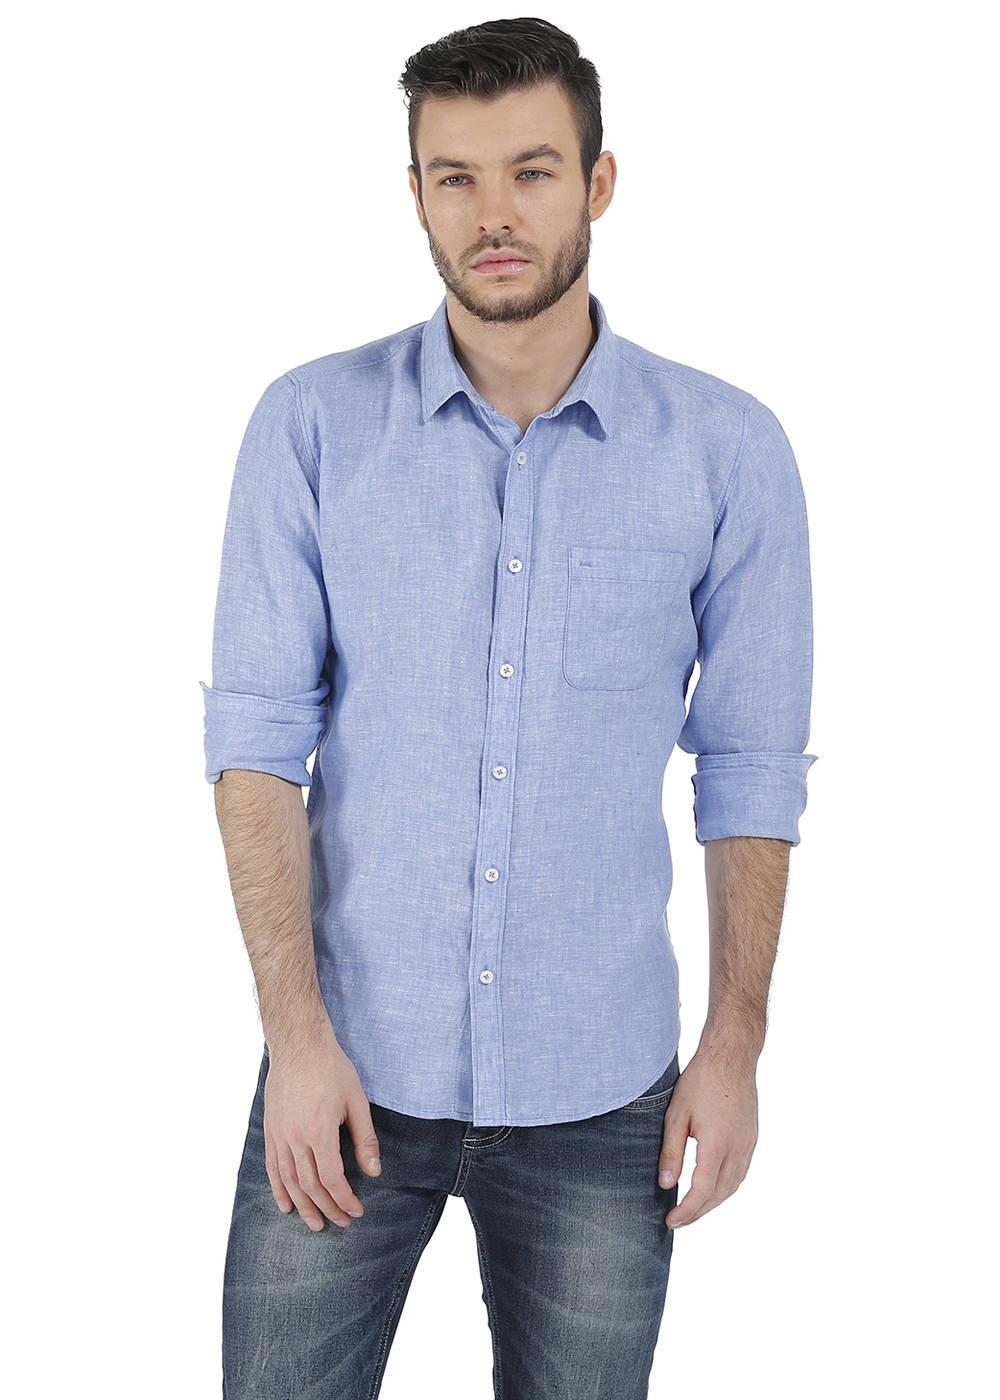 BASICS | Basics Essential Slim Fit Aqua Chambray Linen Shirt-15BCSH32128